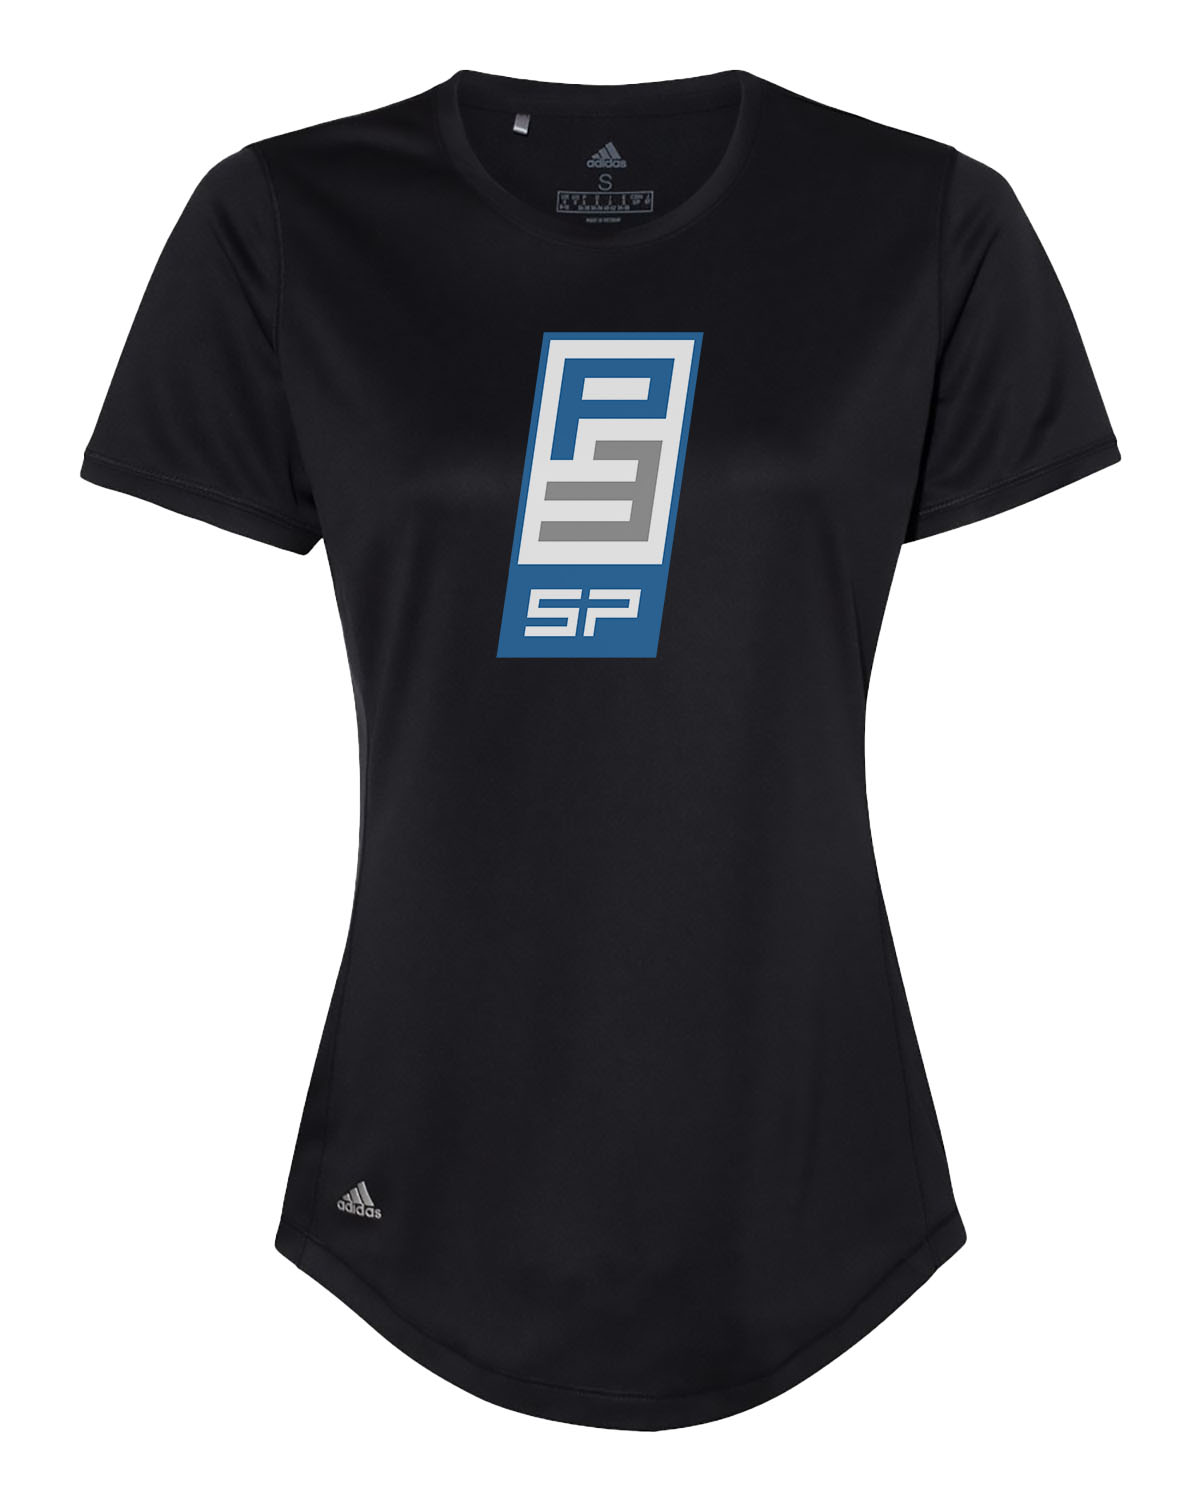 P3SP // Women's Performance Tee - Adidas